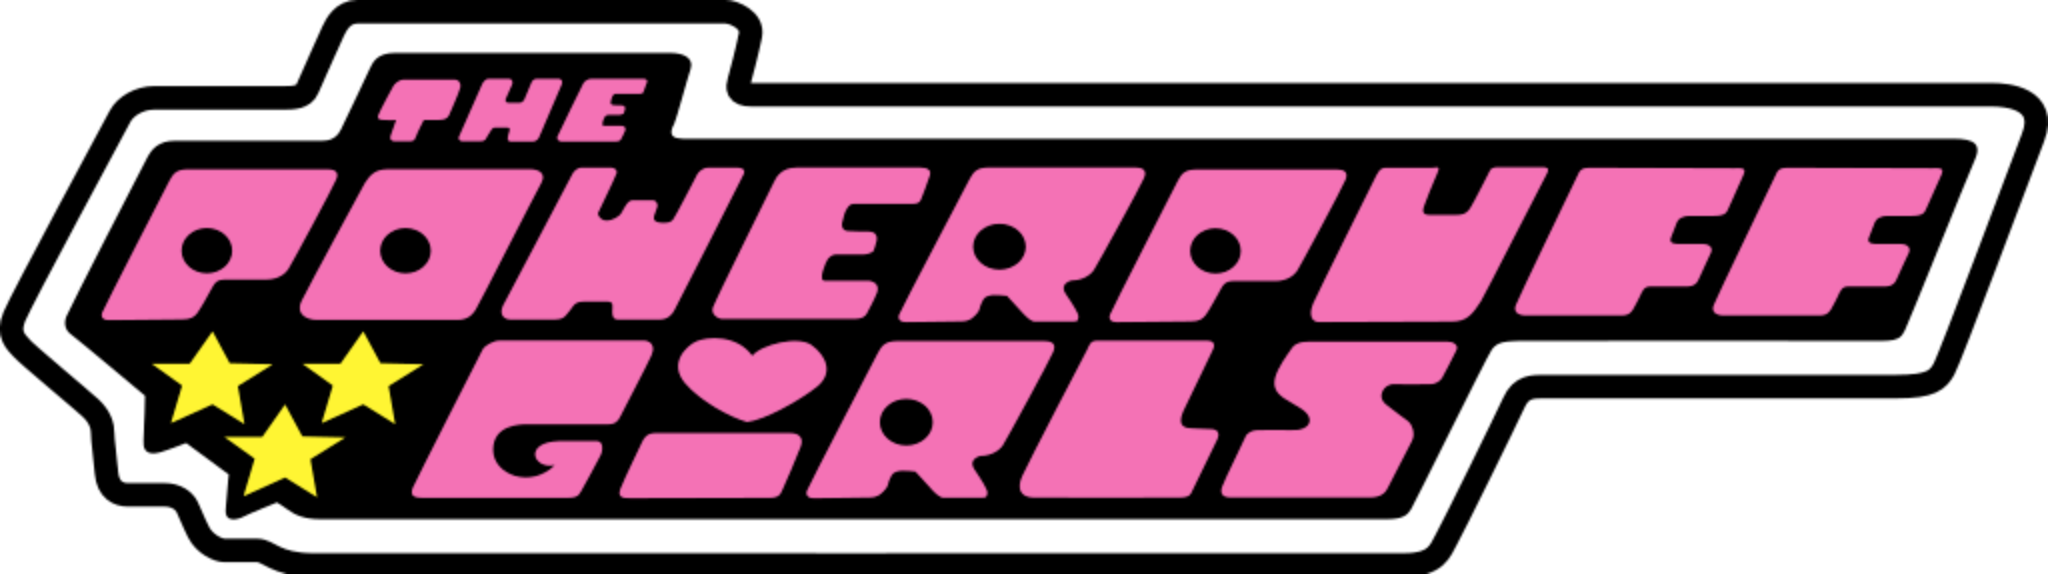 The Powerpuff Girls Volume 2 (4 DVDs Box Set)